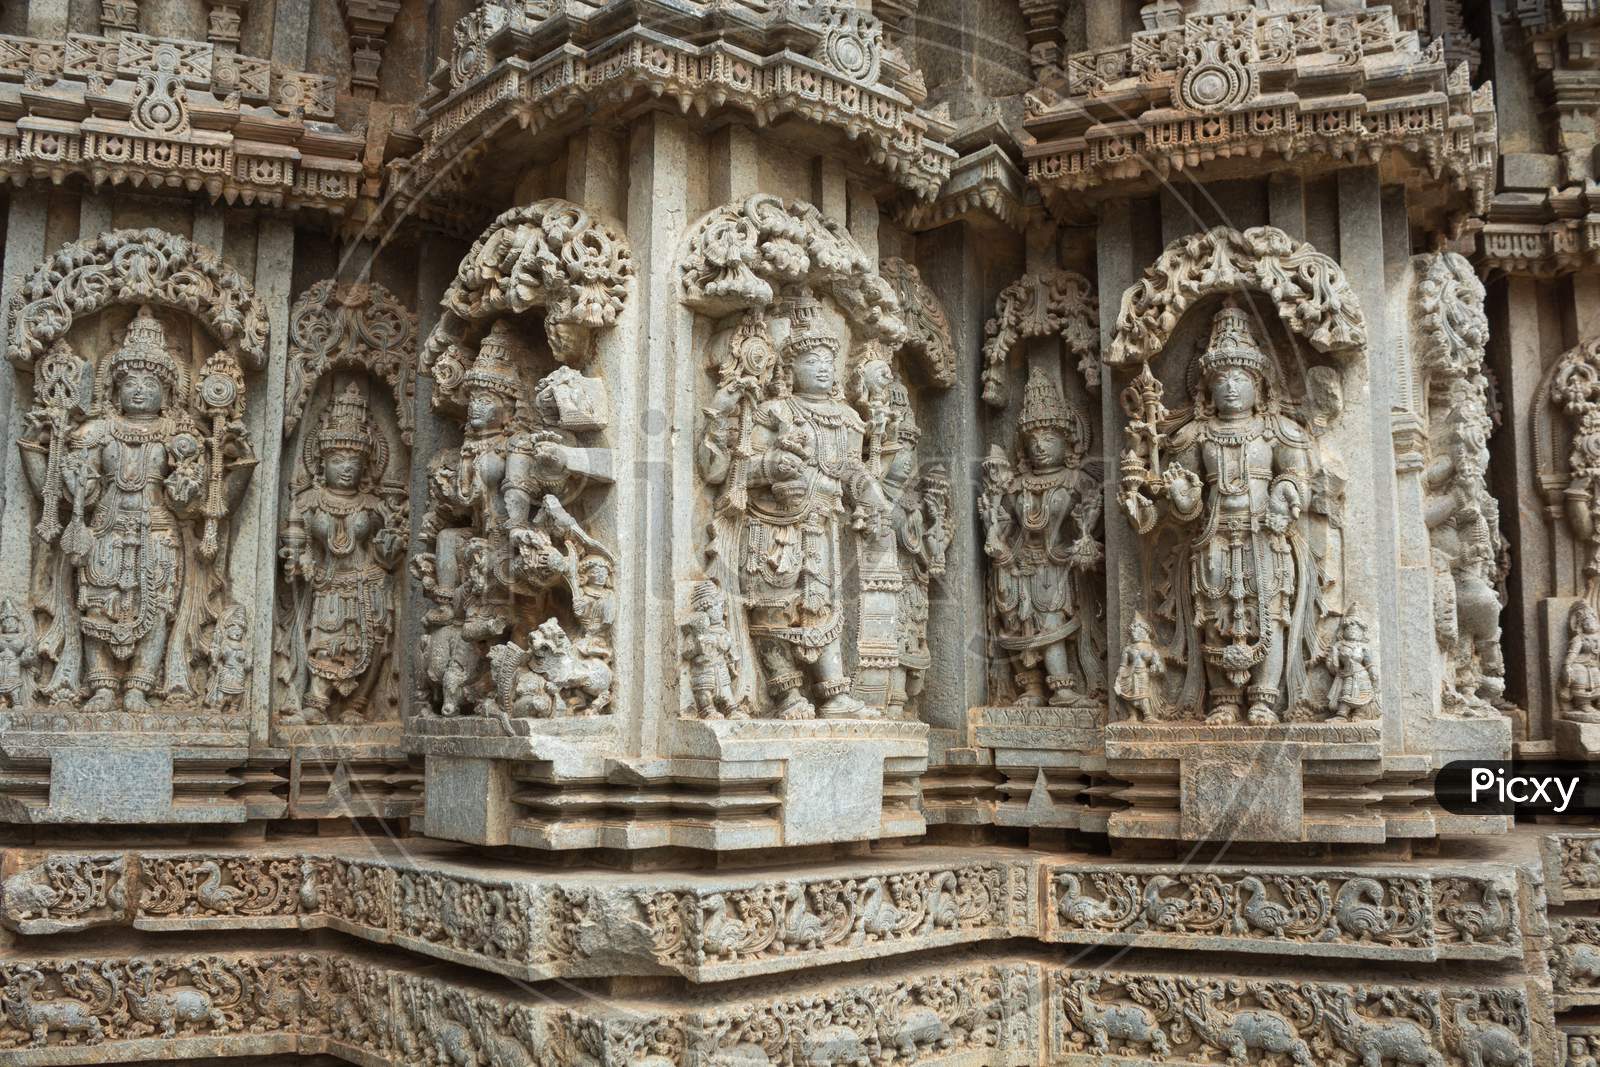 Stone Sculptures at Keshava temple at Somanathapura in Karnataka/India.